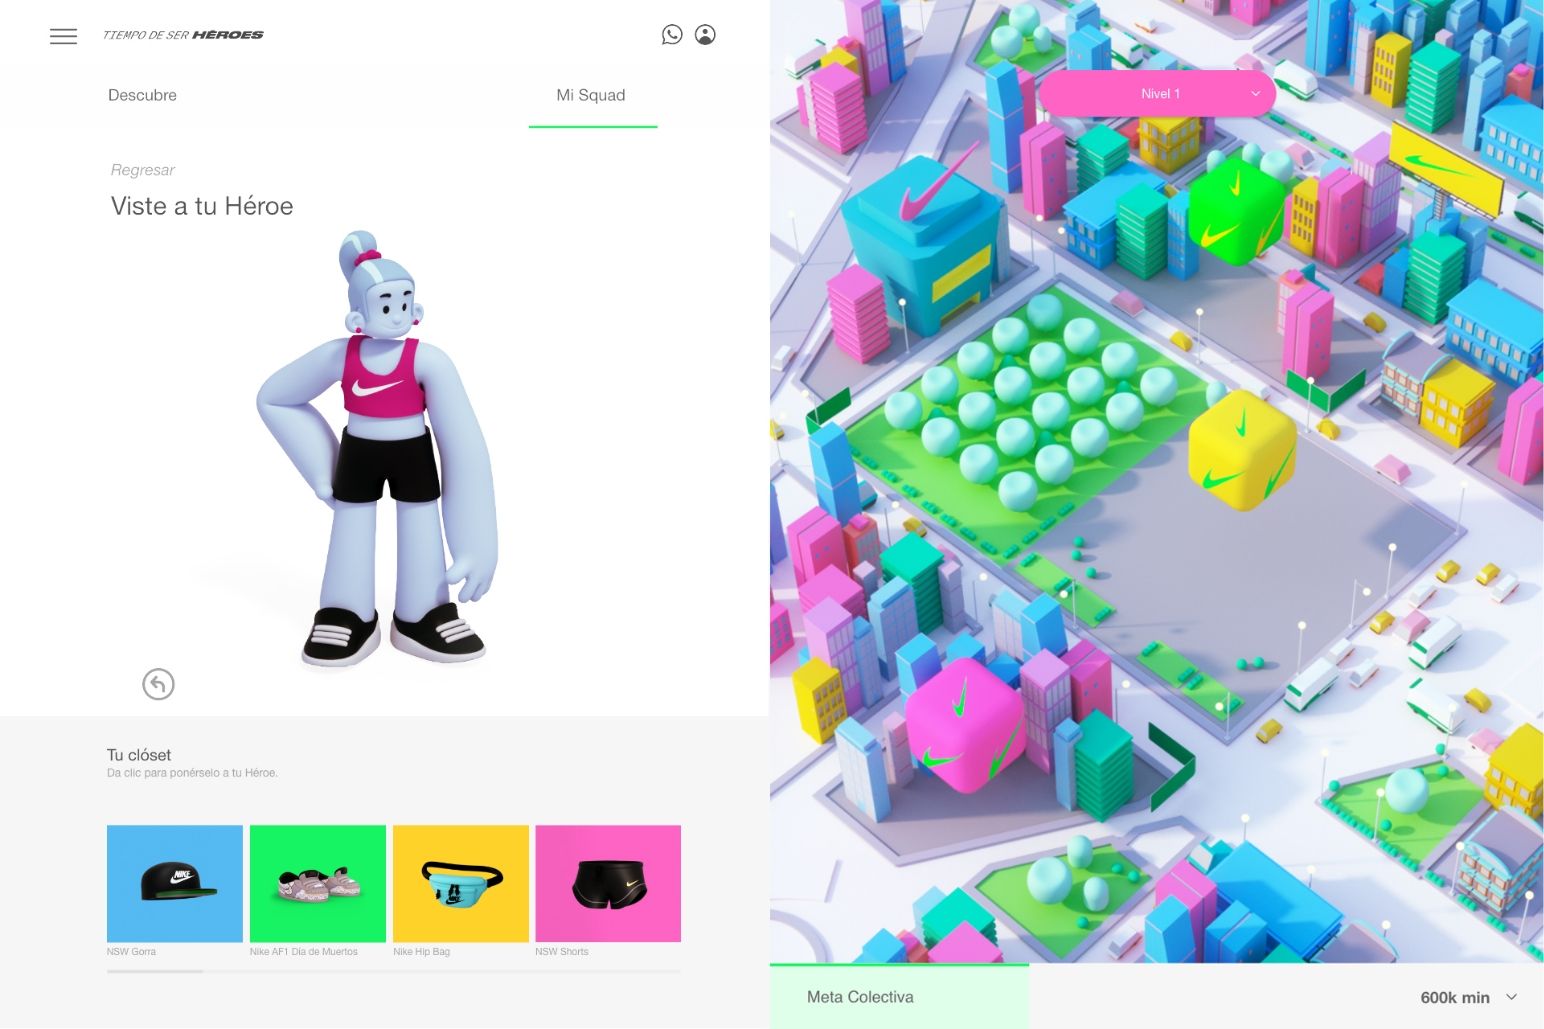 Tiempo de ser heroes app user interface showing avatar, closet, and landscape